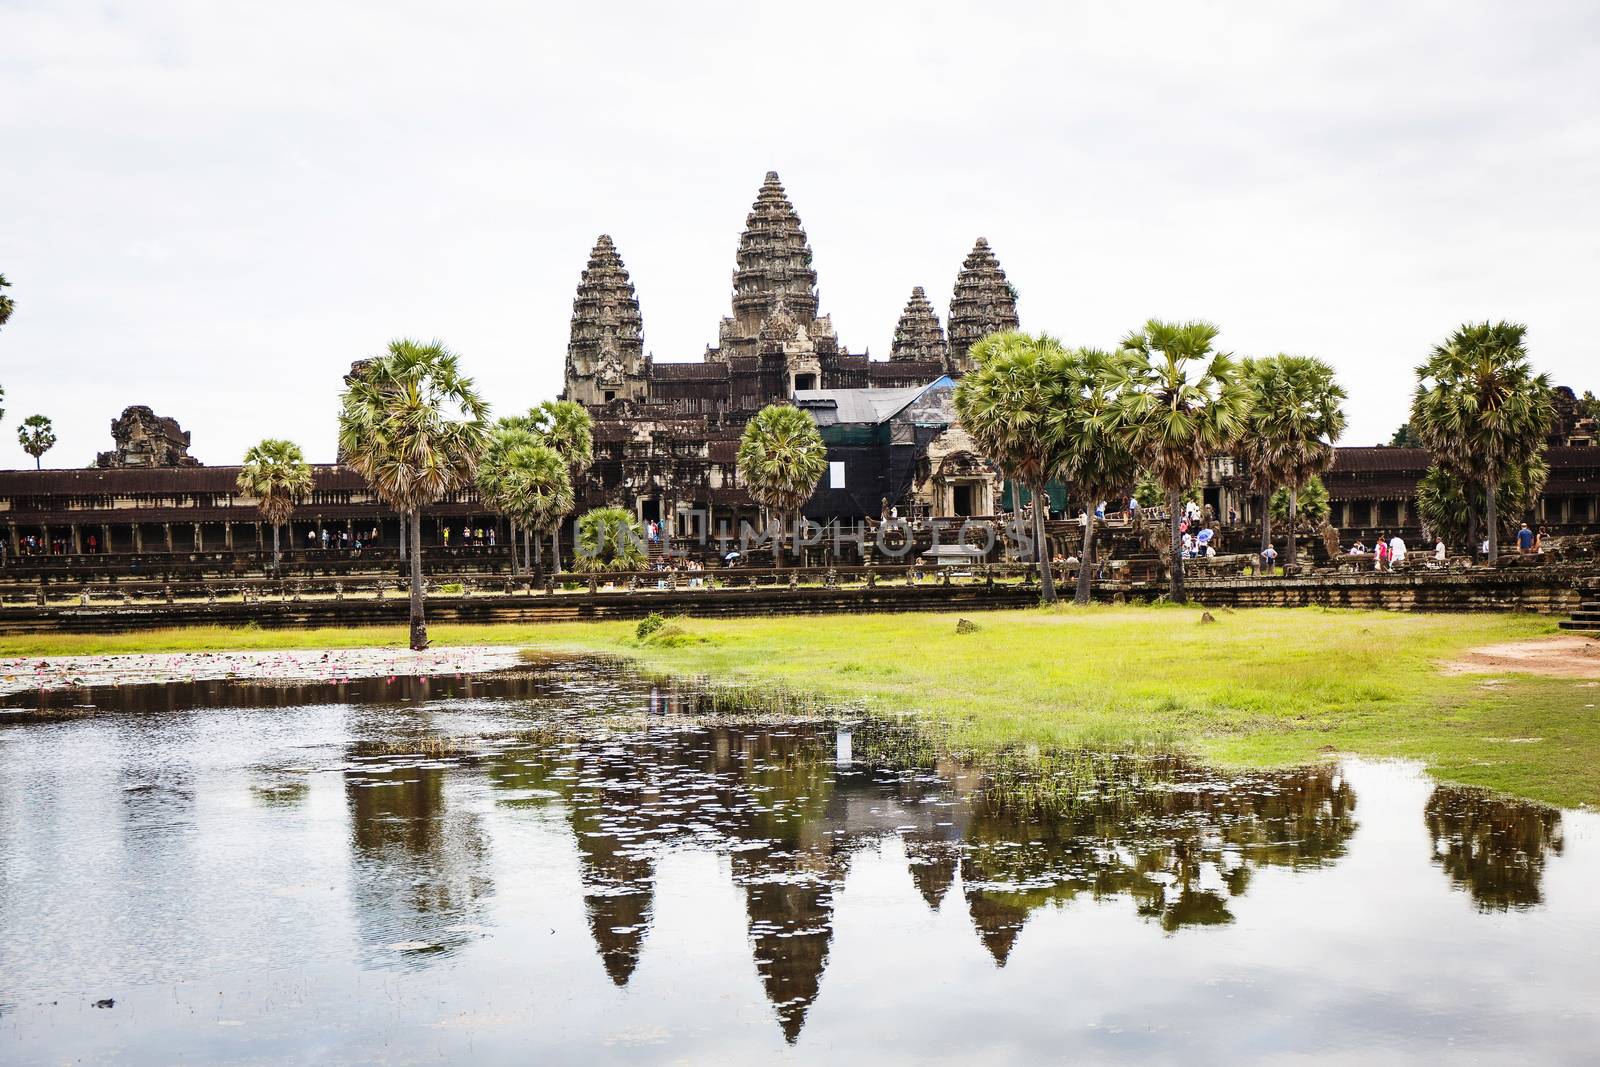  Temple in Cambodia  by gorov108